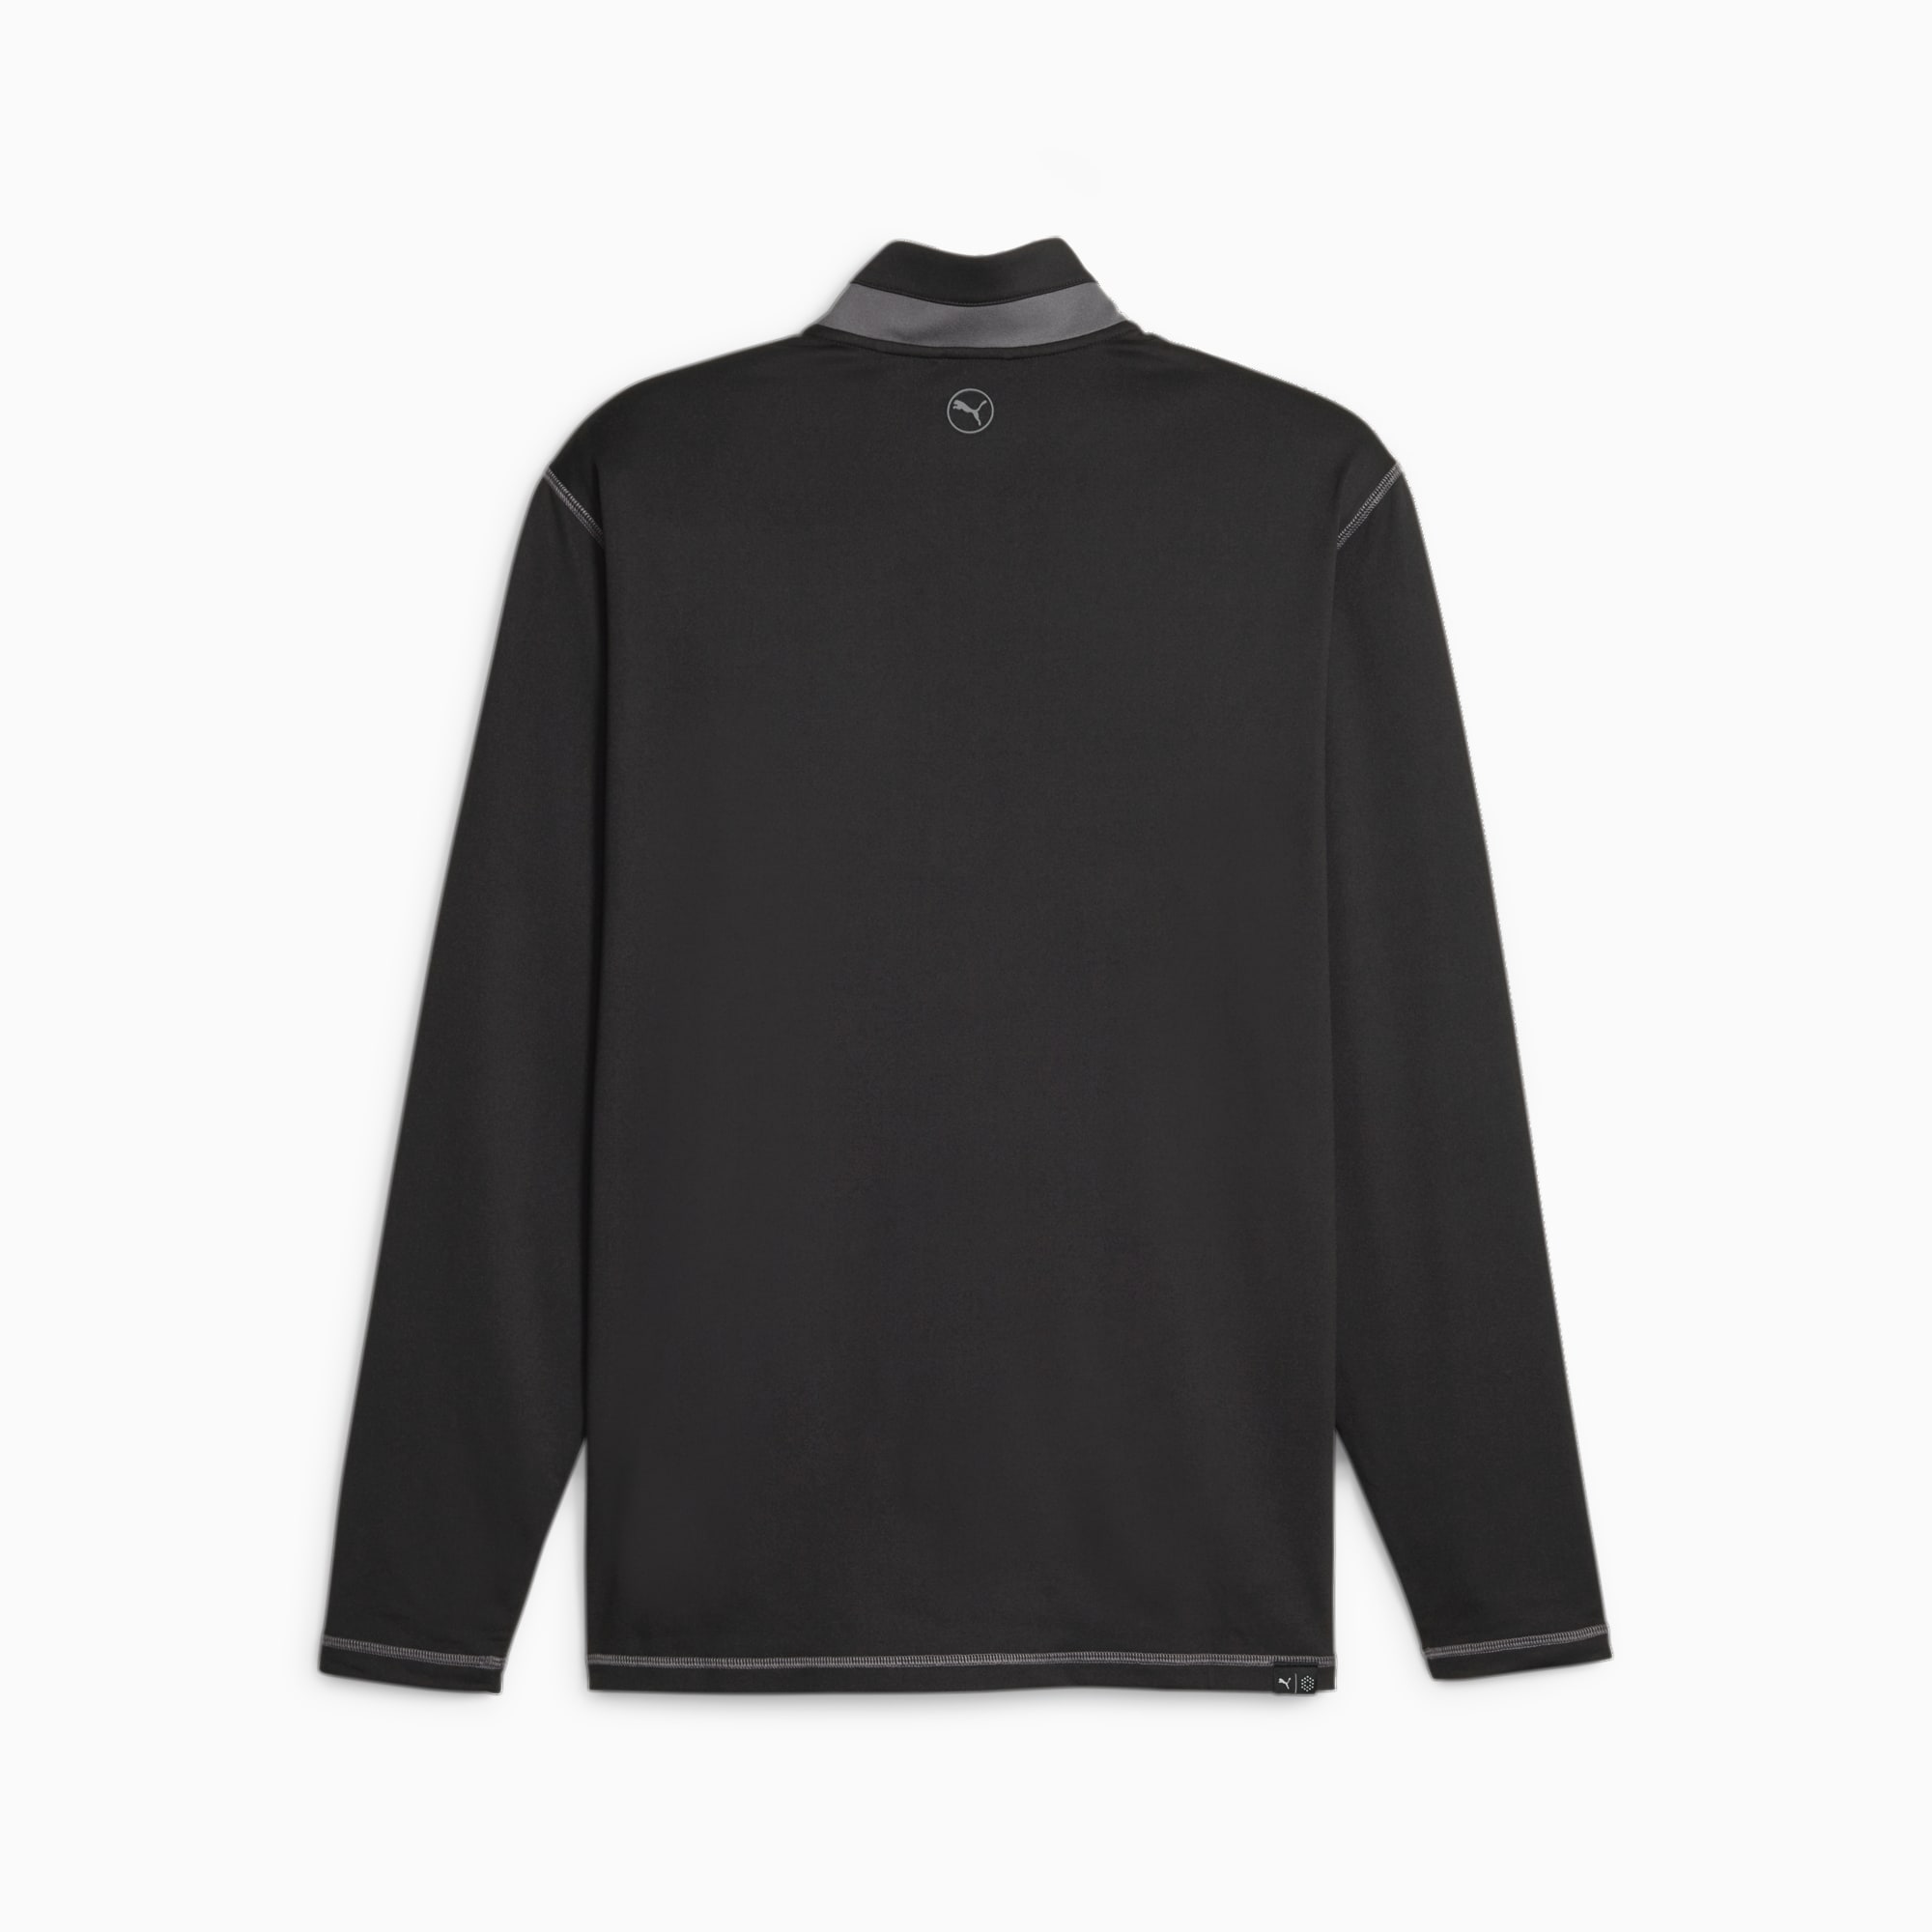 PUMA Men's Lightweight Golf Pullover Top, Black/Slate Sky, Size S, Clothing